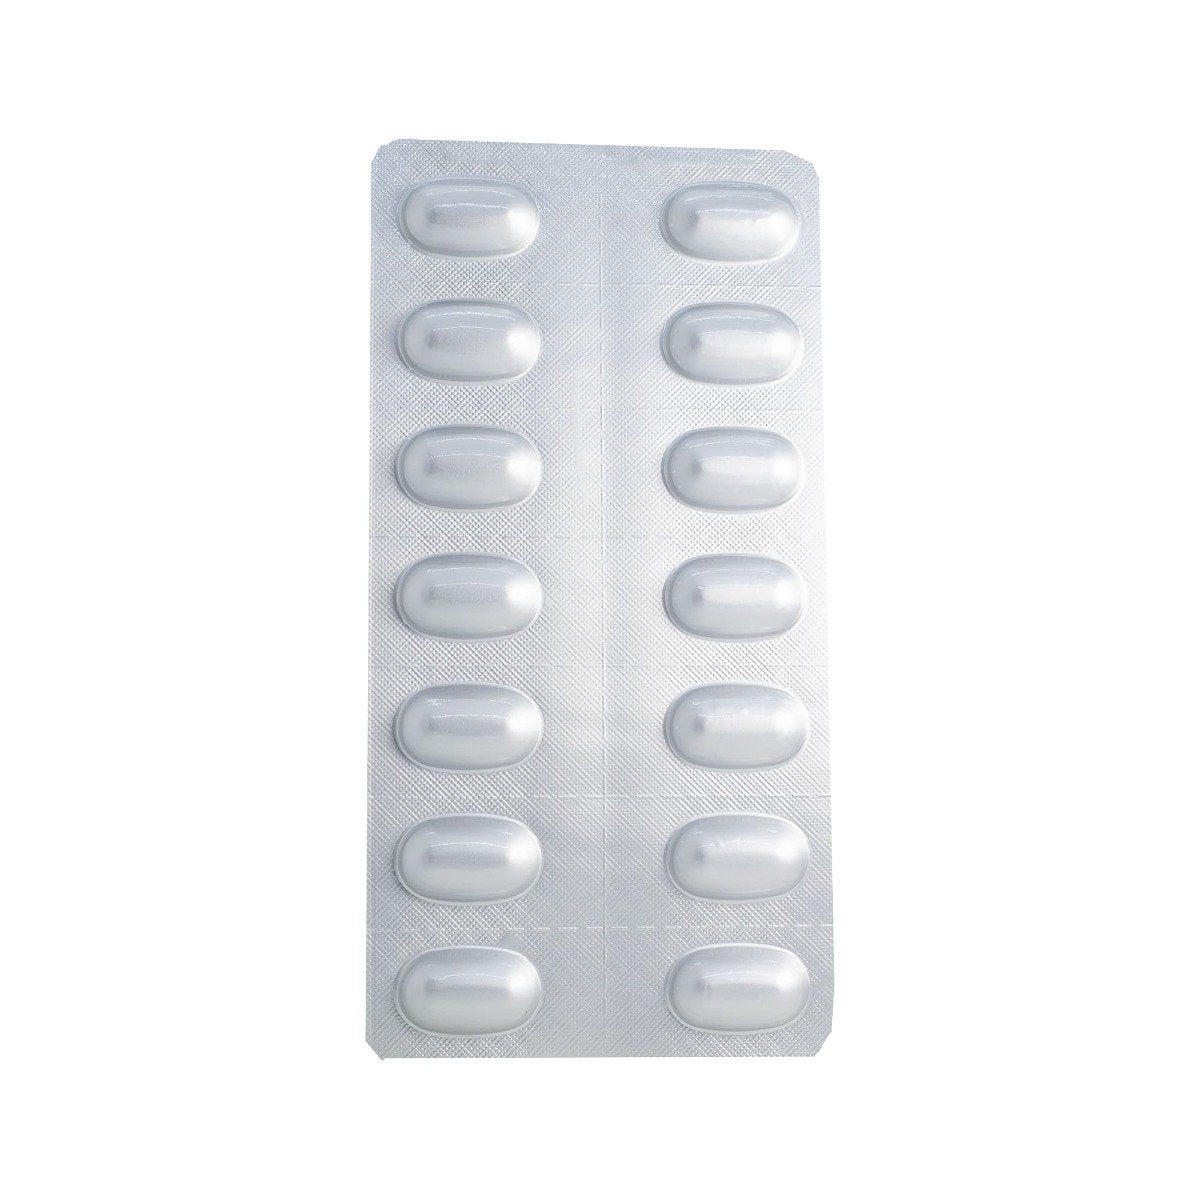 Entresto 50 mg - 28 Tablets - Bloom Pharmacy